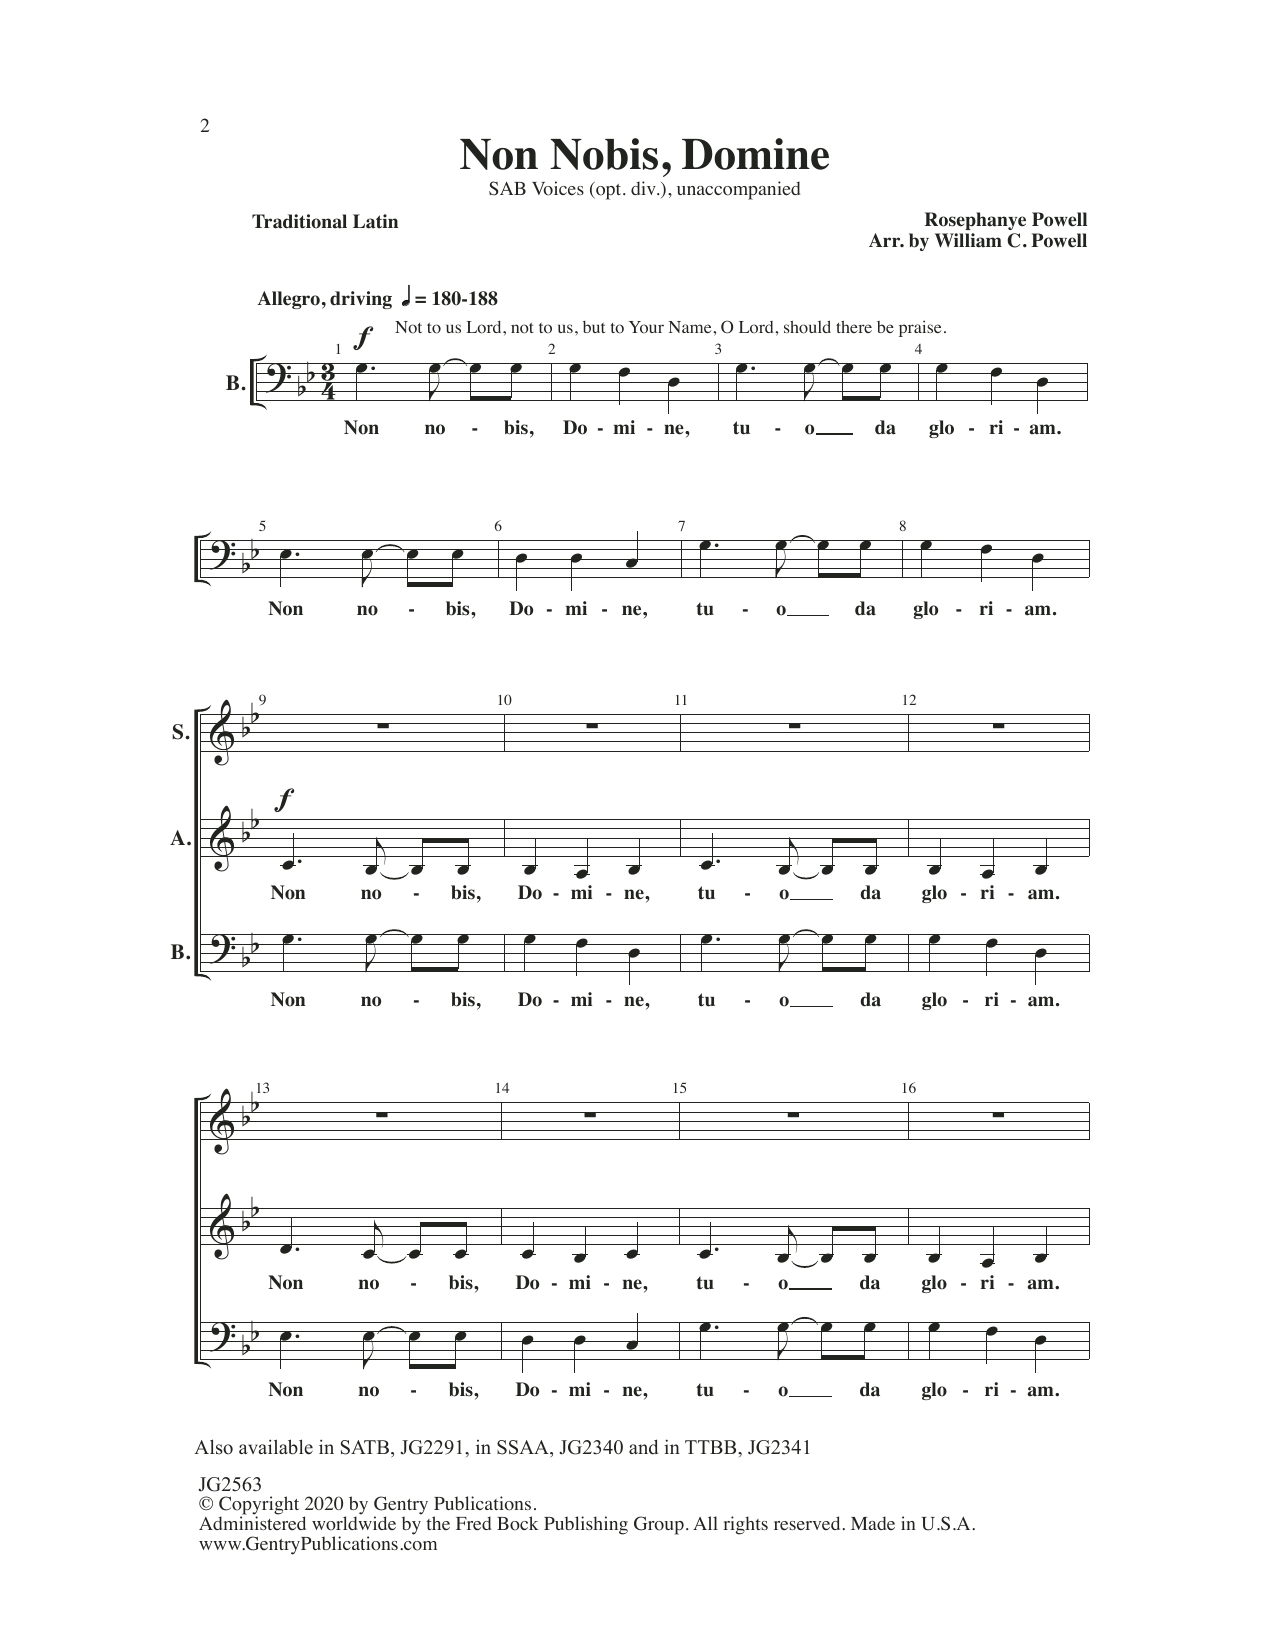 Rosephanye Powell Non Nobis, Domine (arr. William C. Powell) sheet music notes and chords arranged for SAB Choir